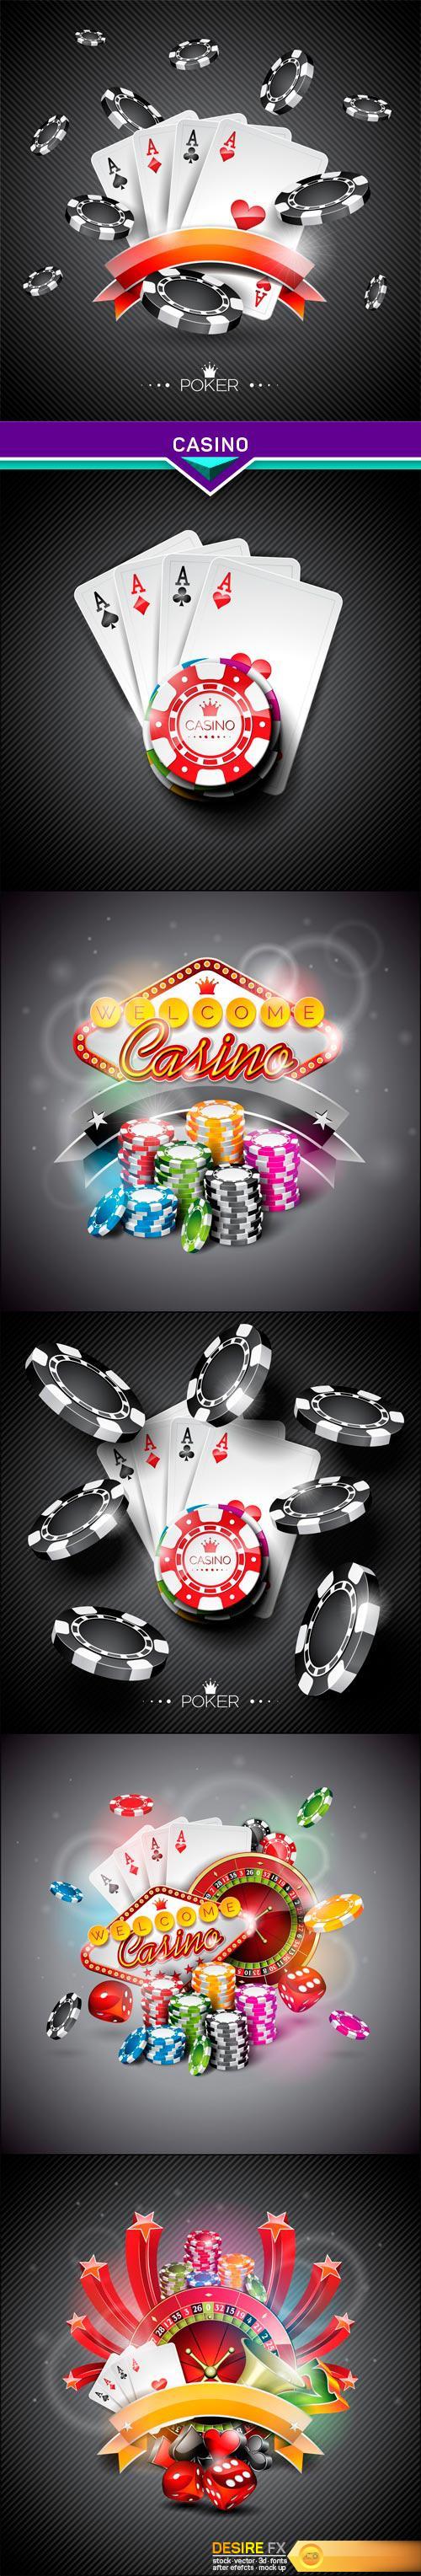 Vector seamless casino pattern illustration #1 6x EPS